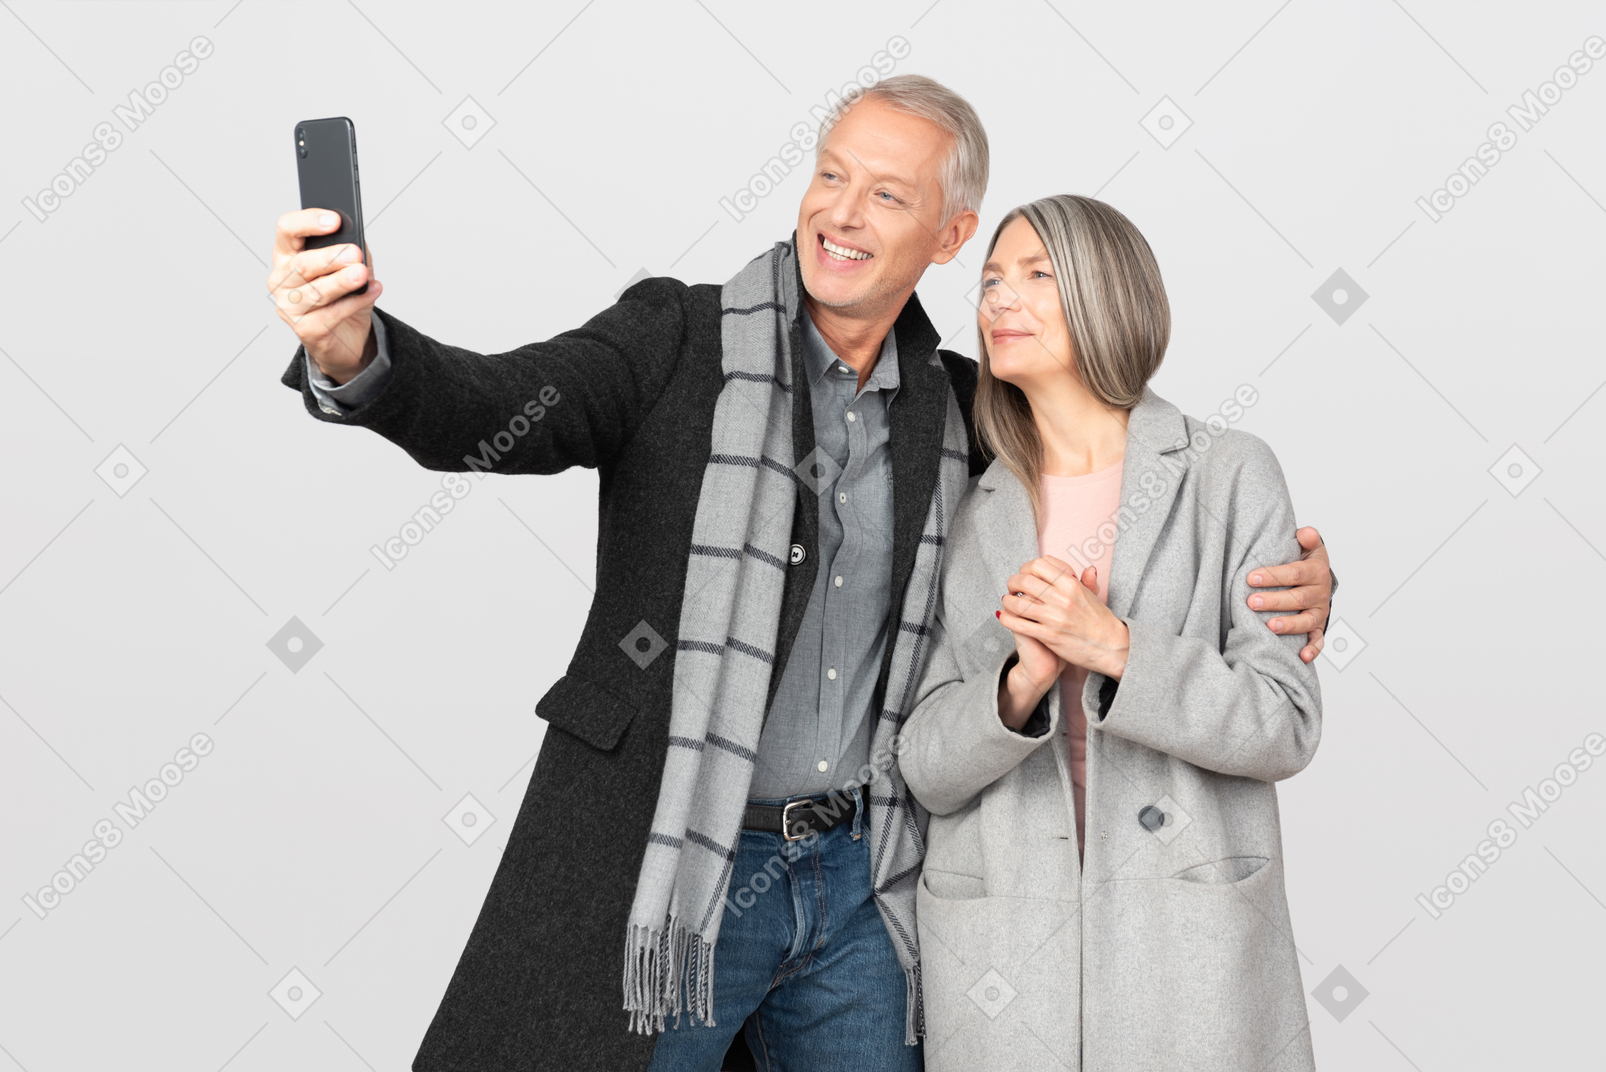 Man and woman taking selfie